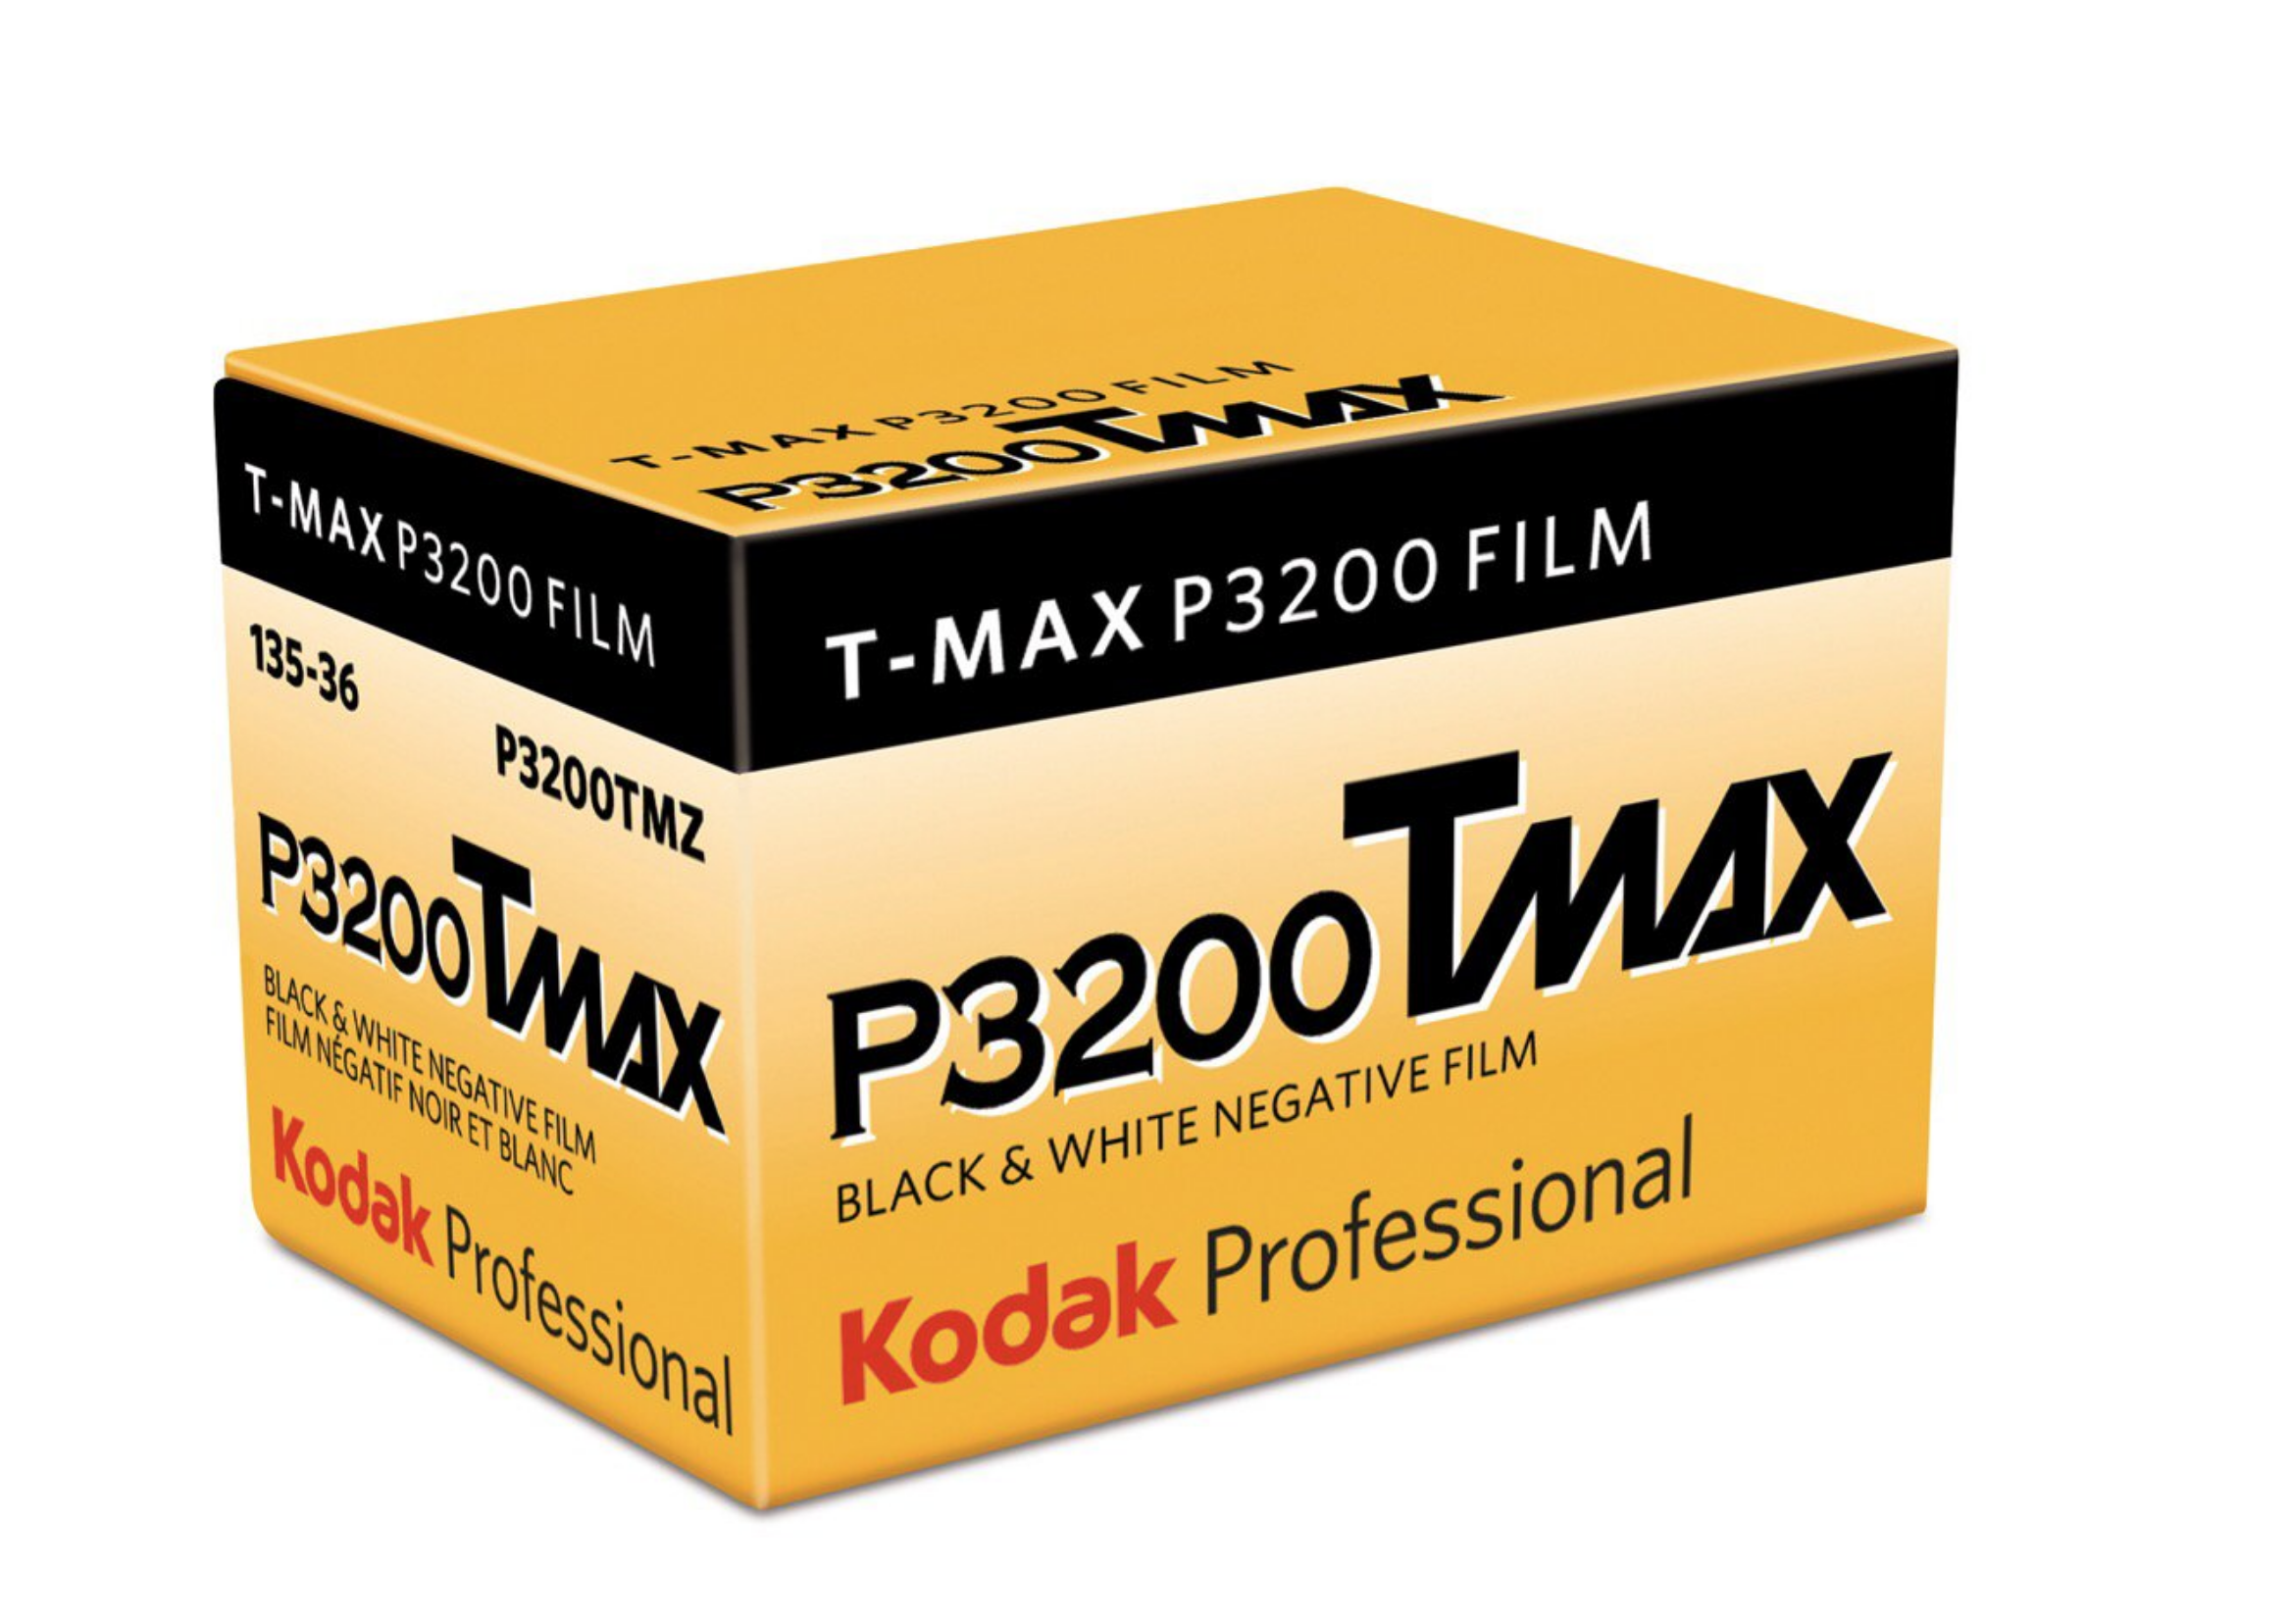 Kodak T-MAX P3200